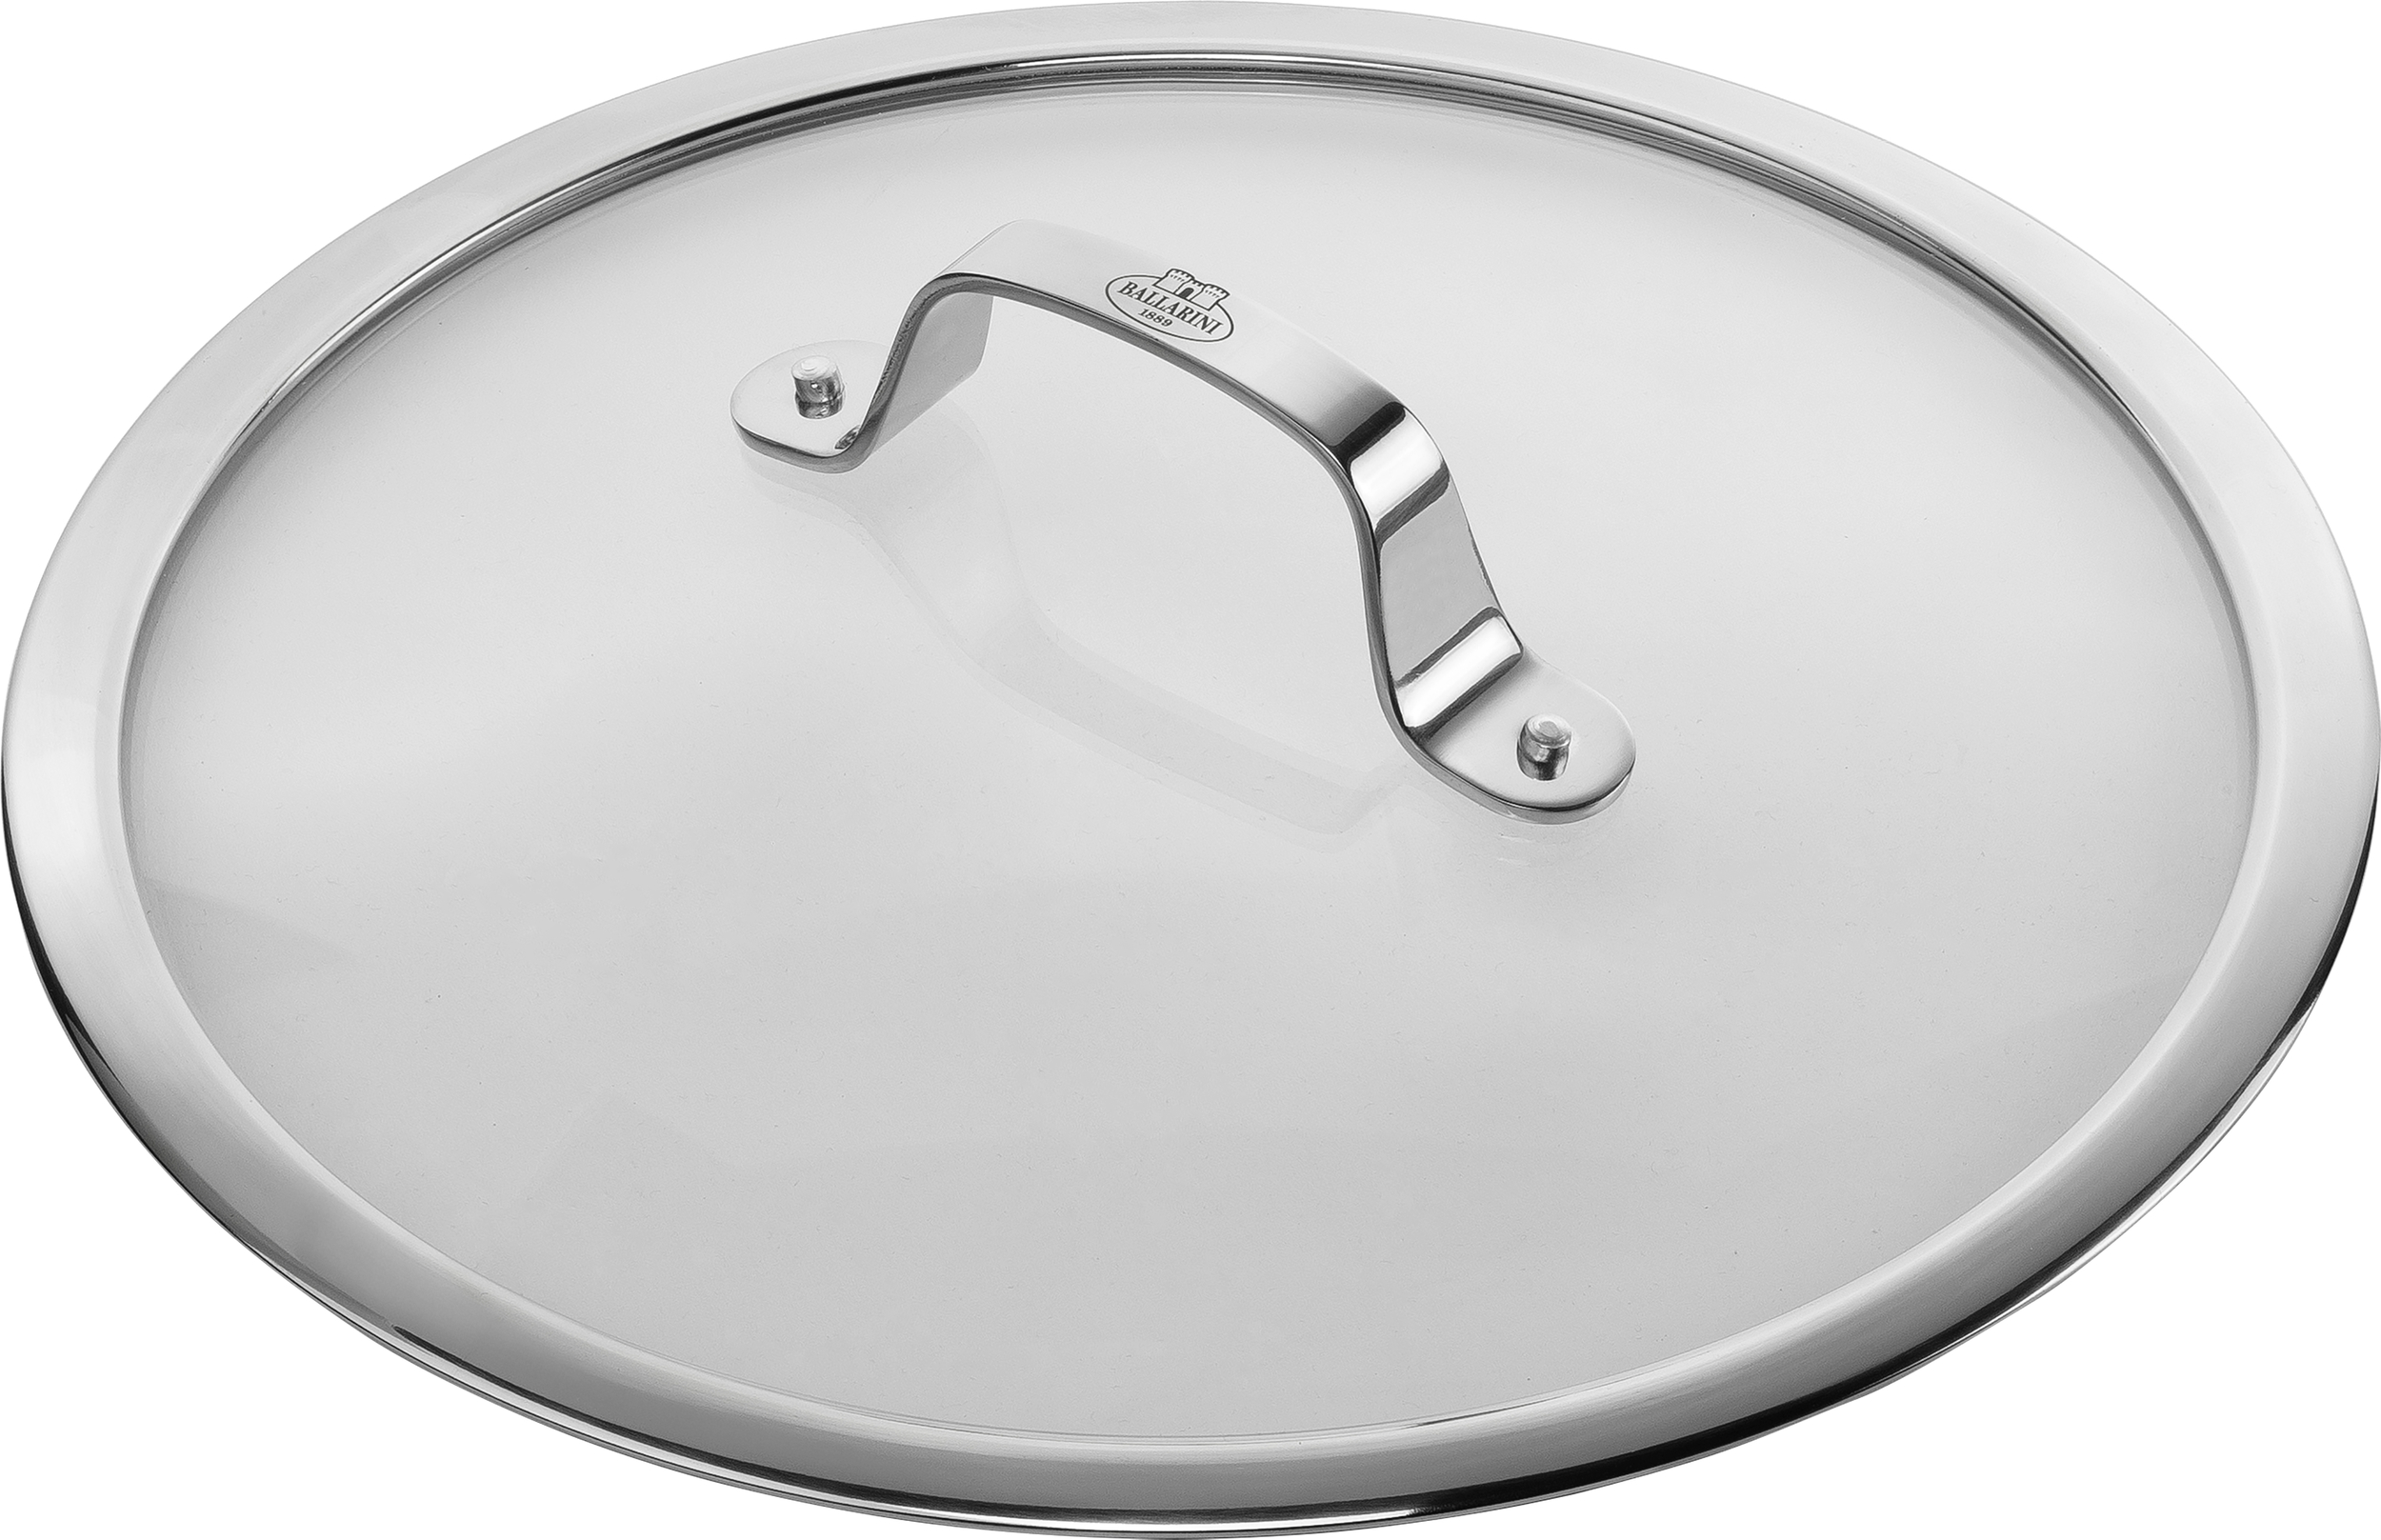 Ballarini - Pot 2 handles with lid cm. 24 - induction - ALBA